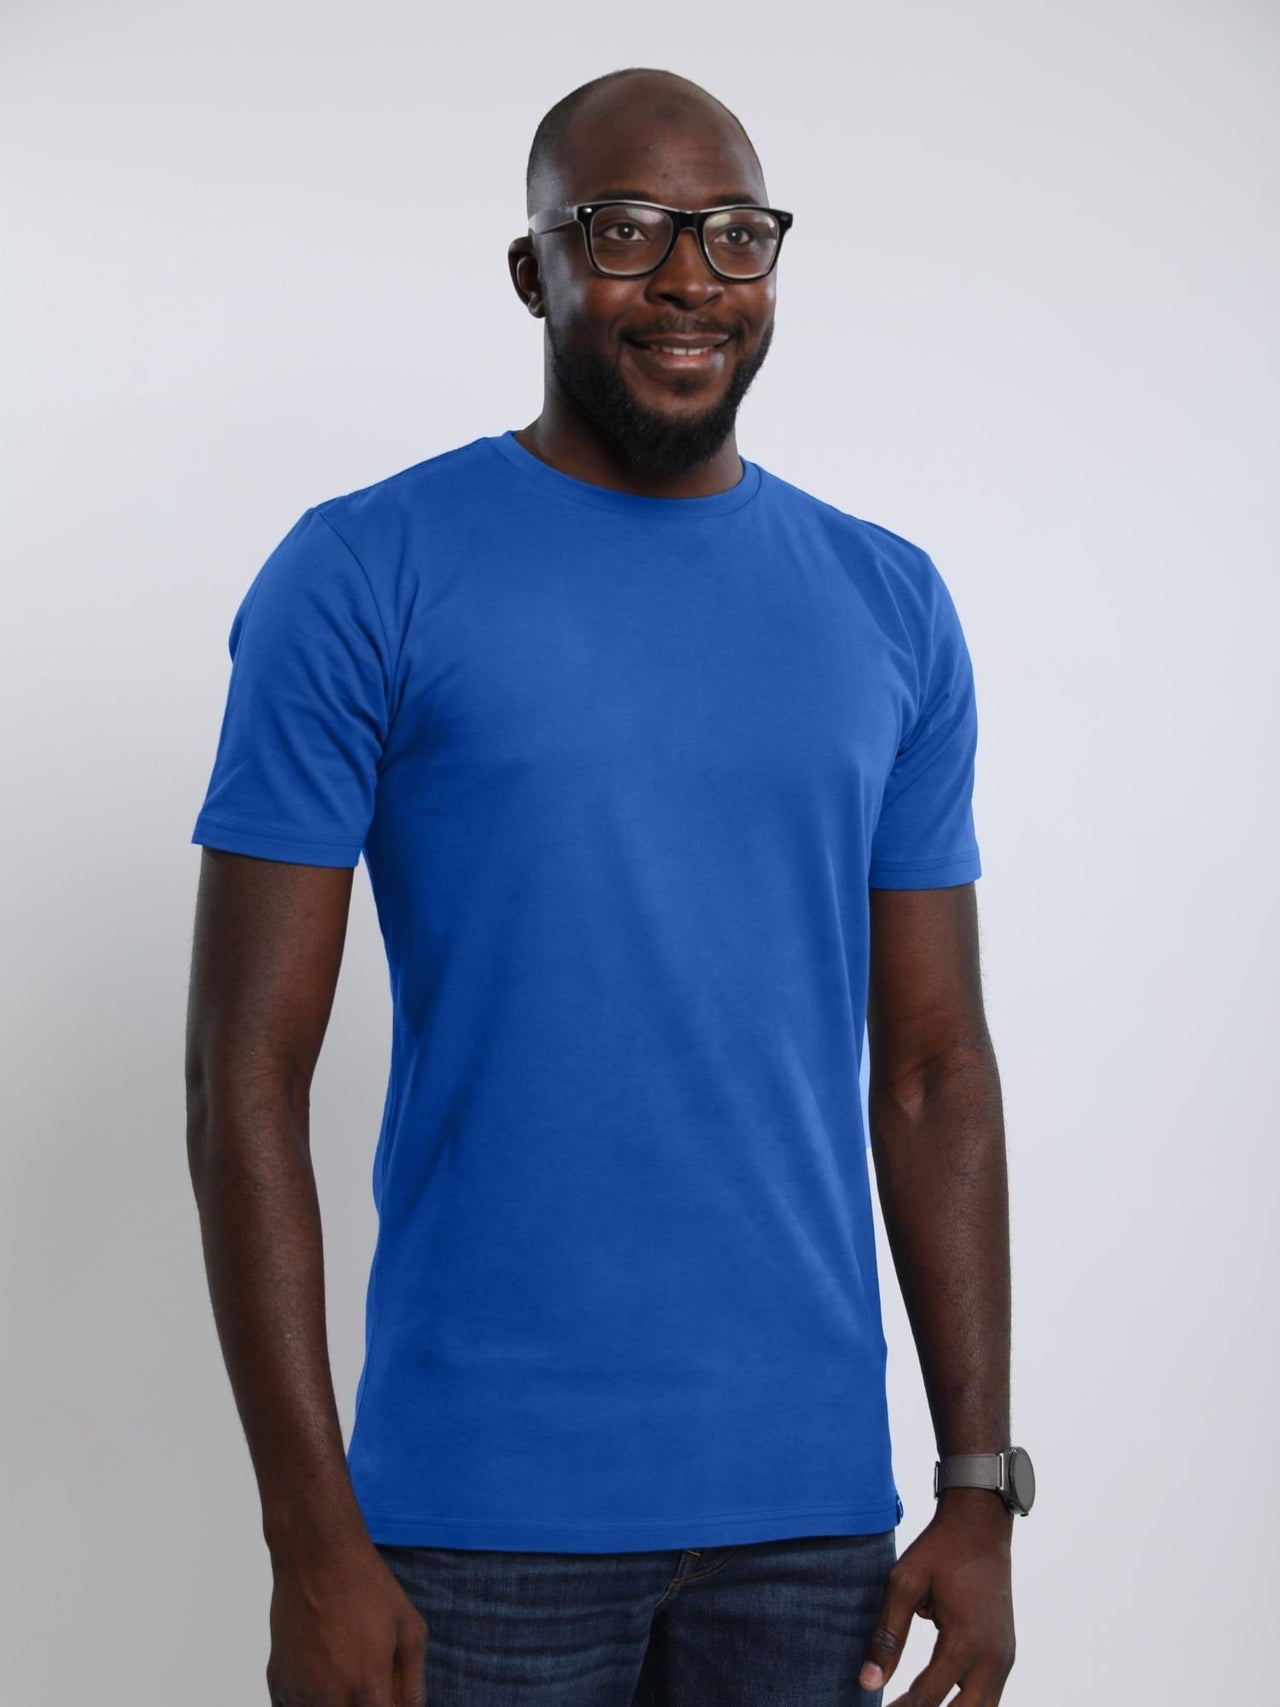 Tall skinny guy wearing a medium blue tall t-shirt.